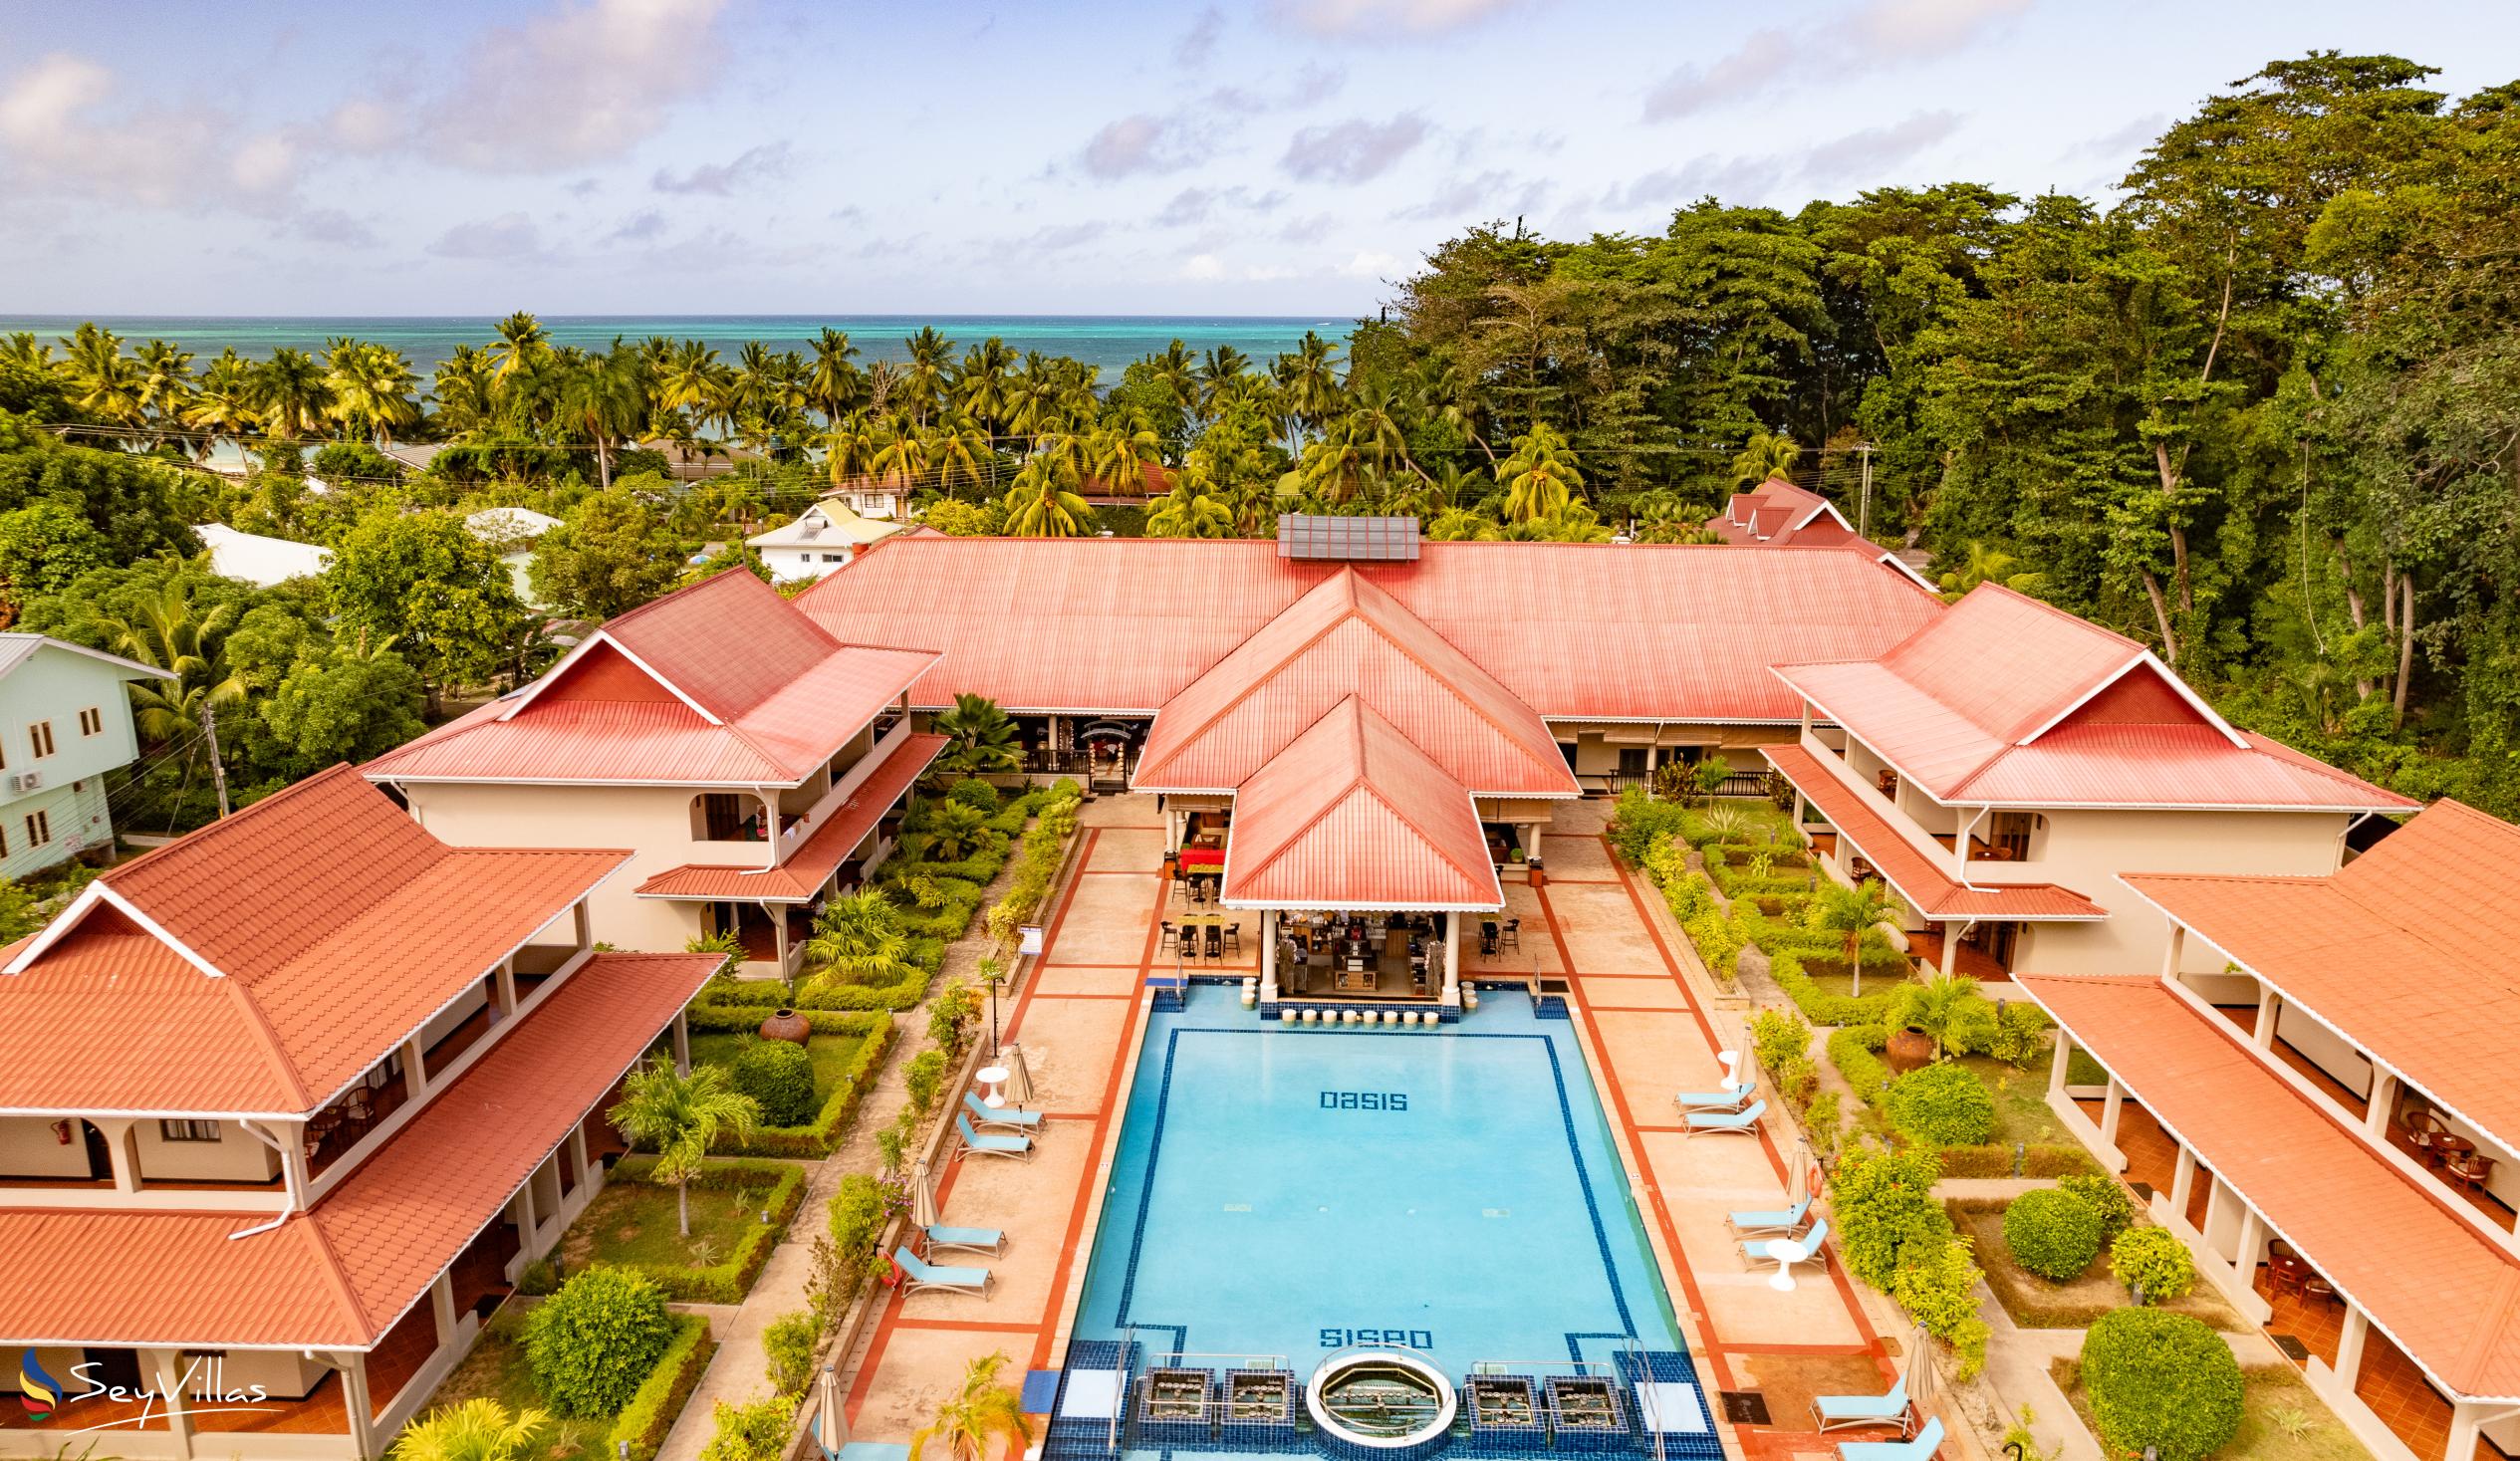 Photo 1: Oasis Hotel, Restaurant & Spa - Outdoor area - Praslin (Seychelles)